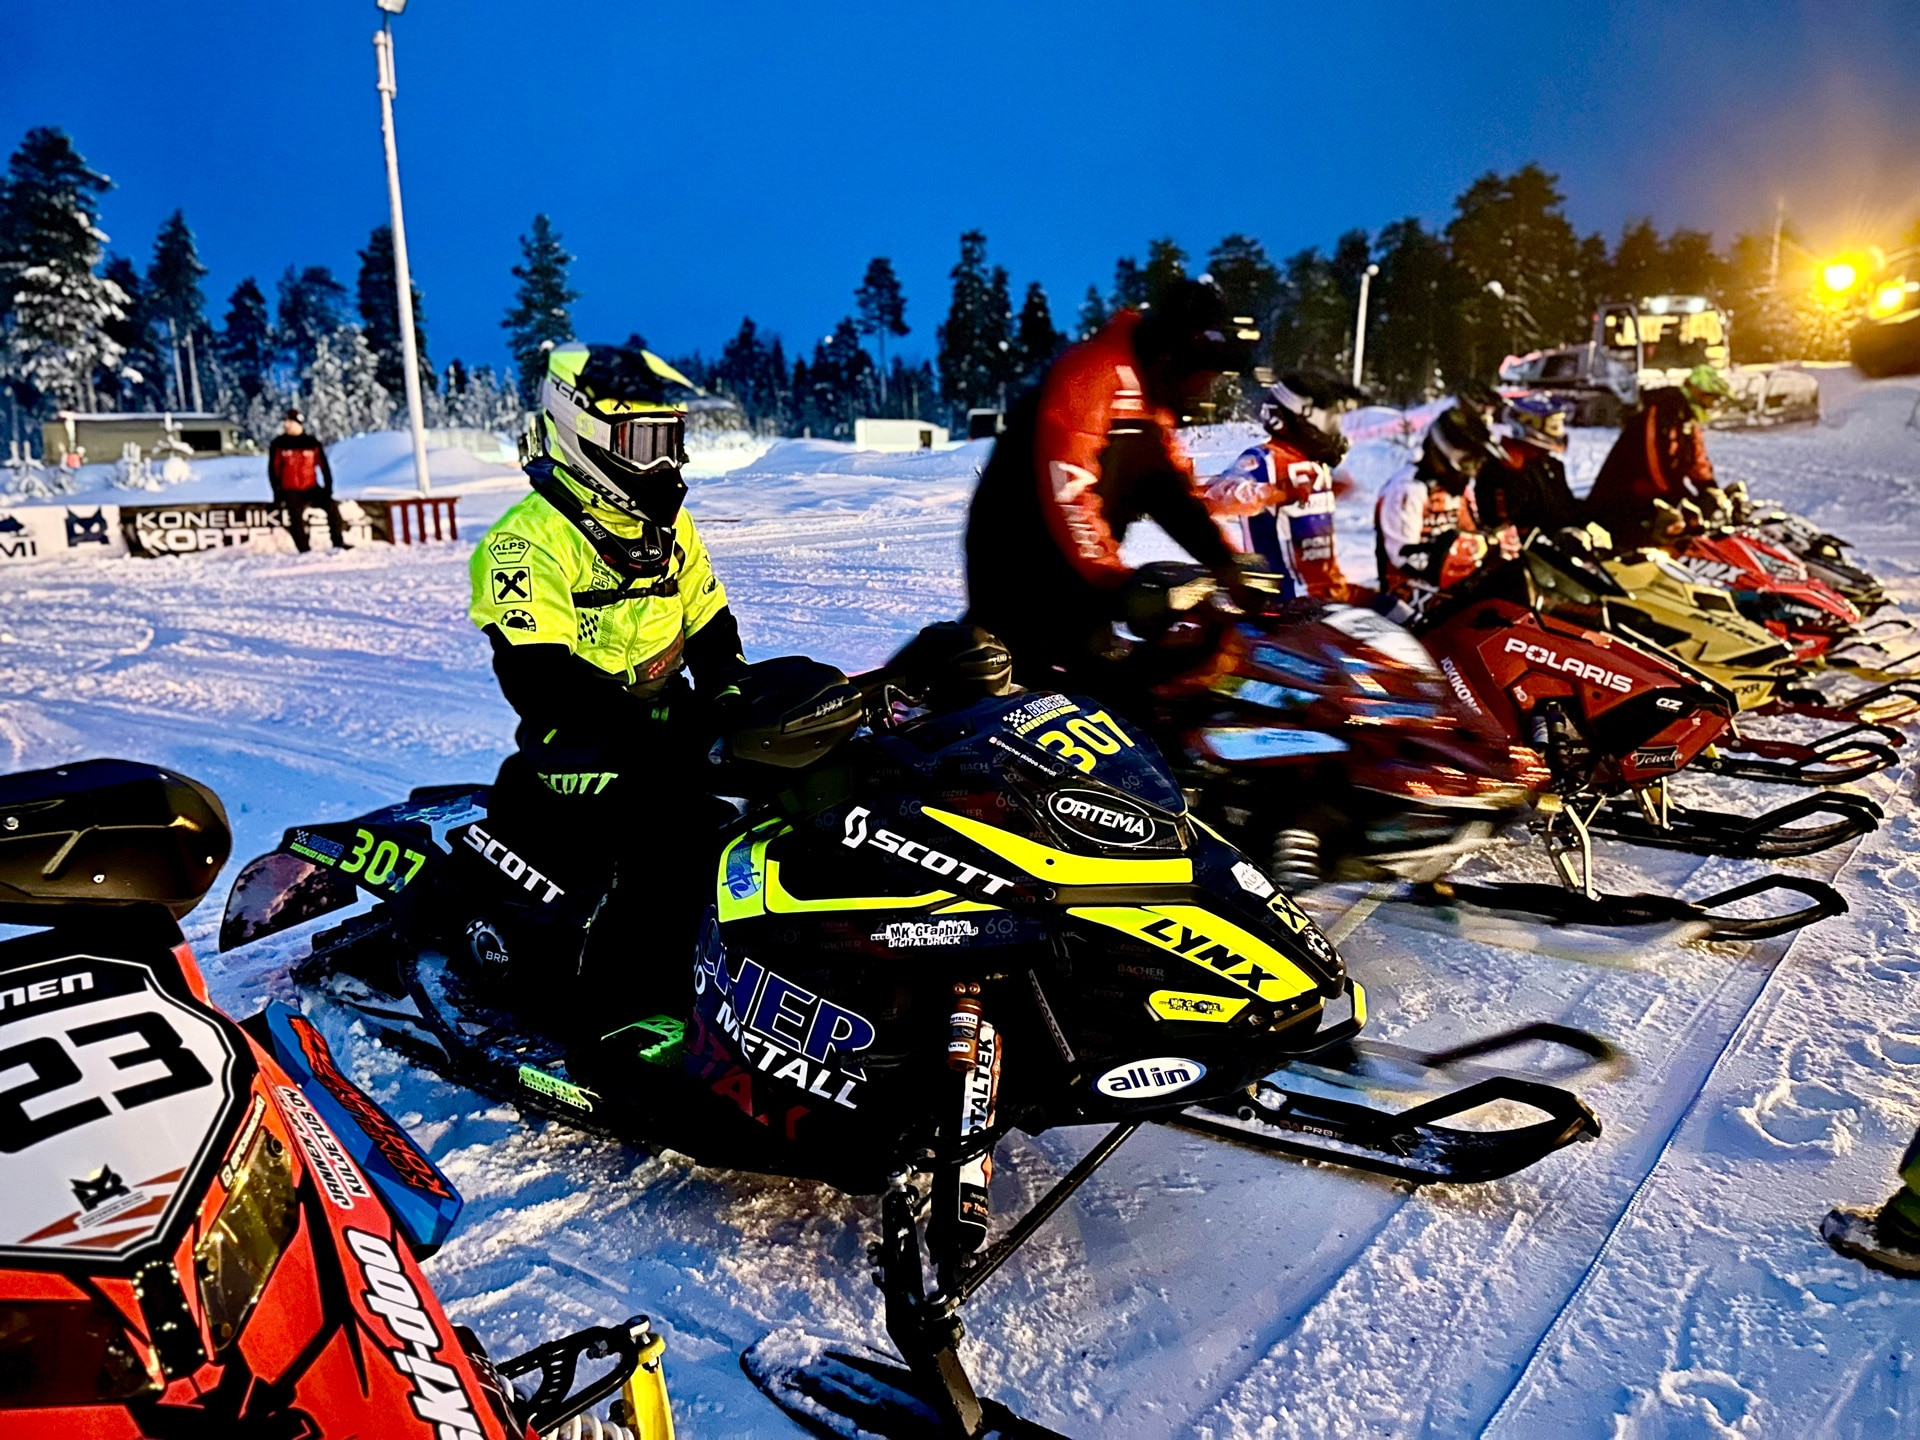 Snowcrosser Elias Bacher has a strong start to the season in Finland!